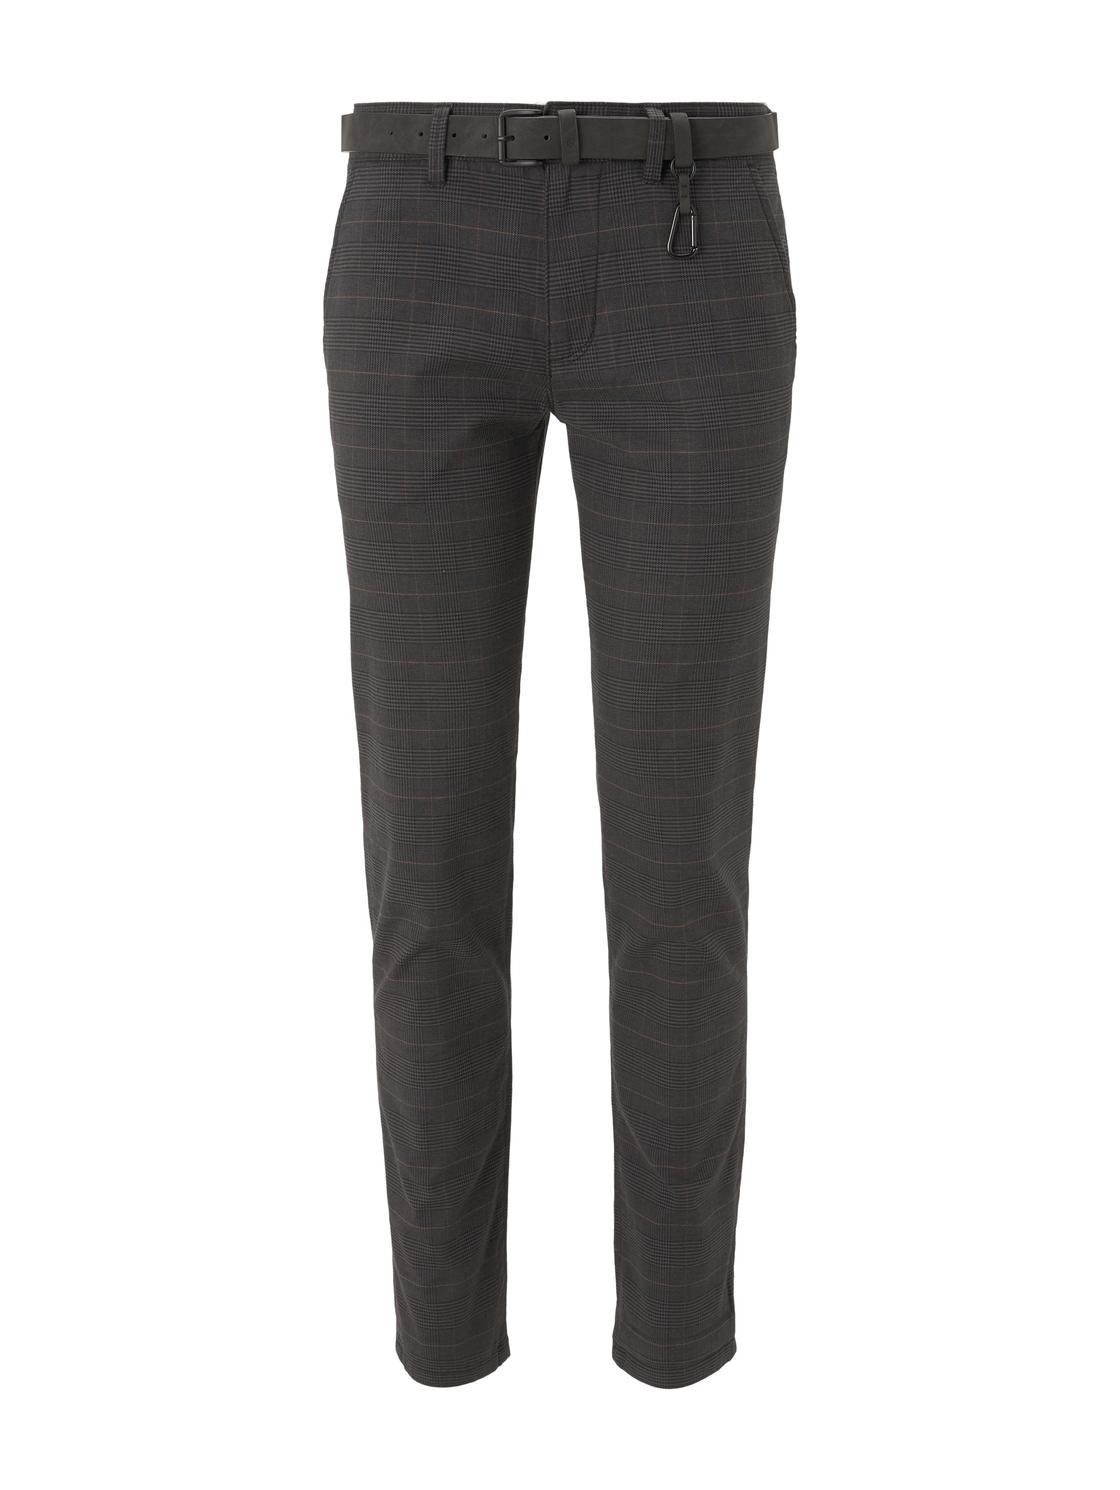 Тканевые брюки TOM TAILOR Denim Stoff/Chino Chino mit Gürtel regular/straight, серый рубашка tom tailor размер s серый